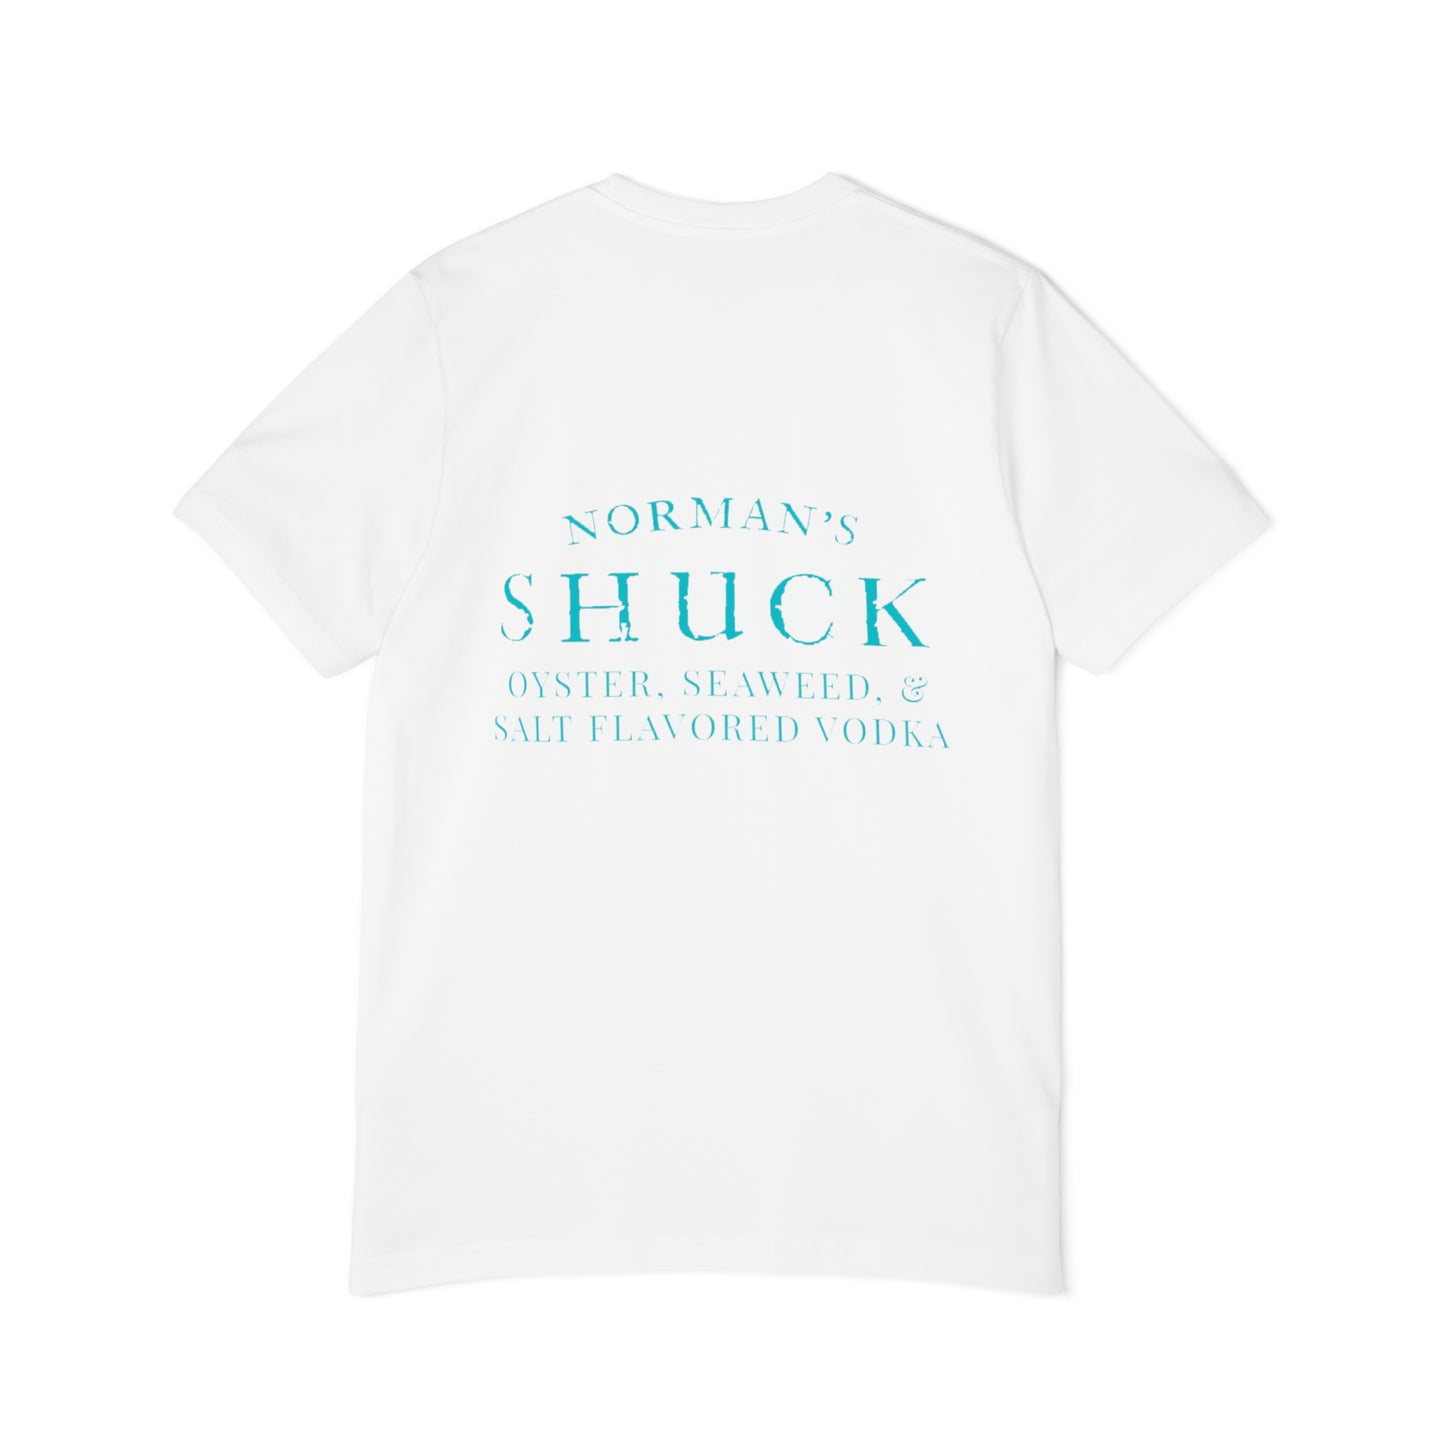 "Shuck Yeah" Unisex Short-Sleeve Jersey T-Shirt Made in the USA